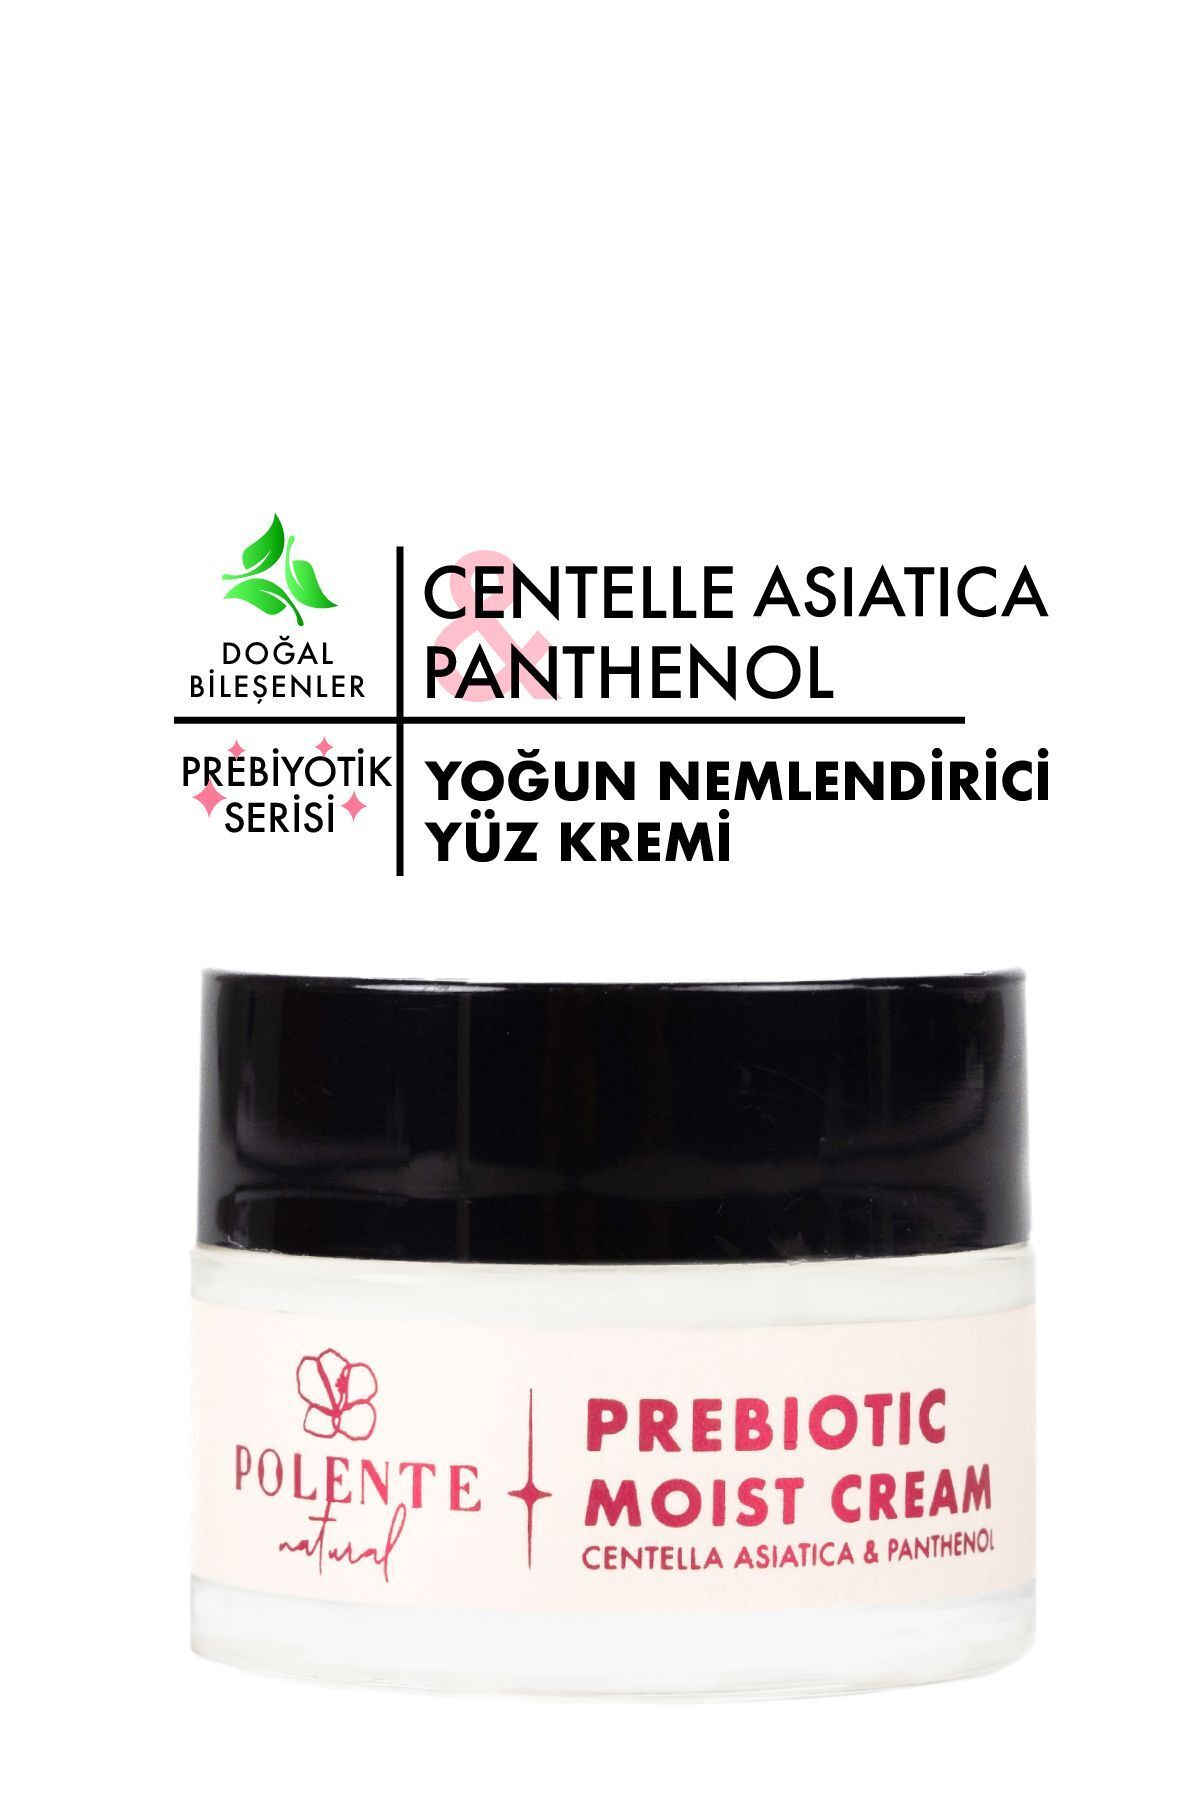 Polente Natural Prebiotic Moist Cream - Cica & Panthenol Yoğun Nemlendirici Prebiyotik Yüz Kremi (50 ML)